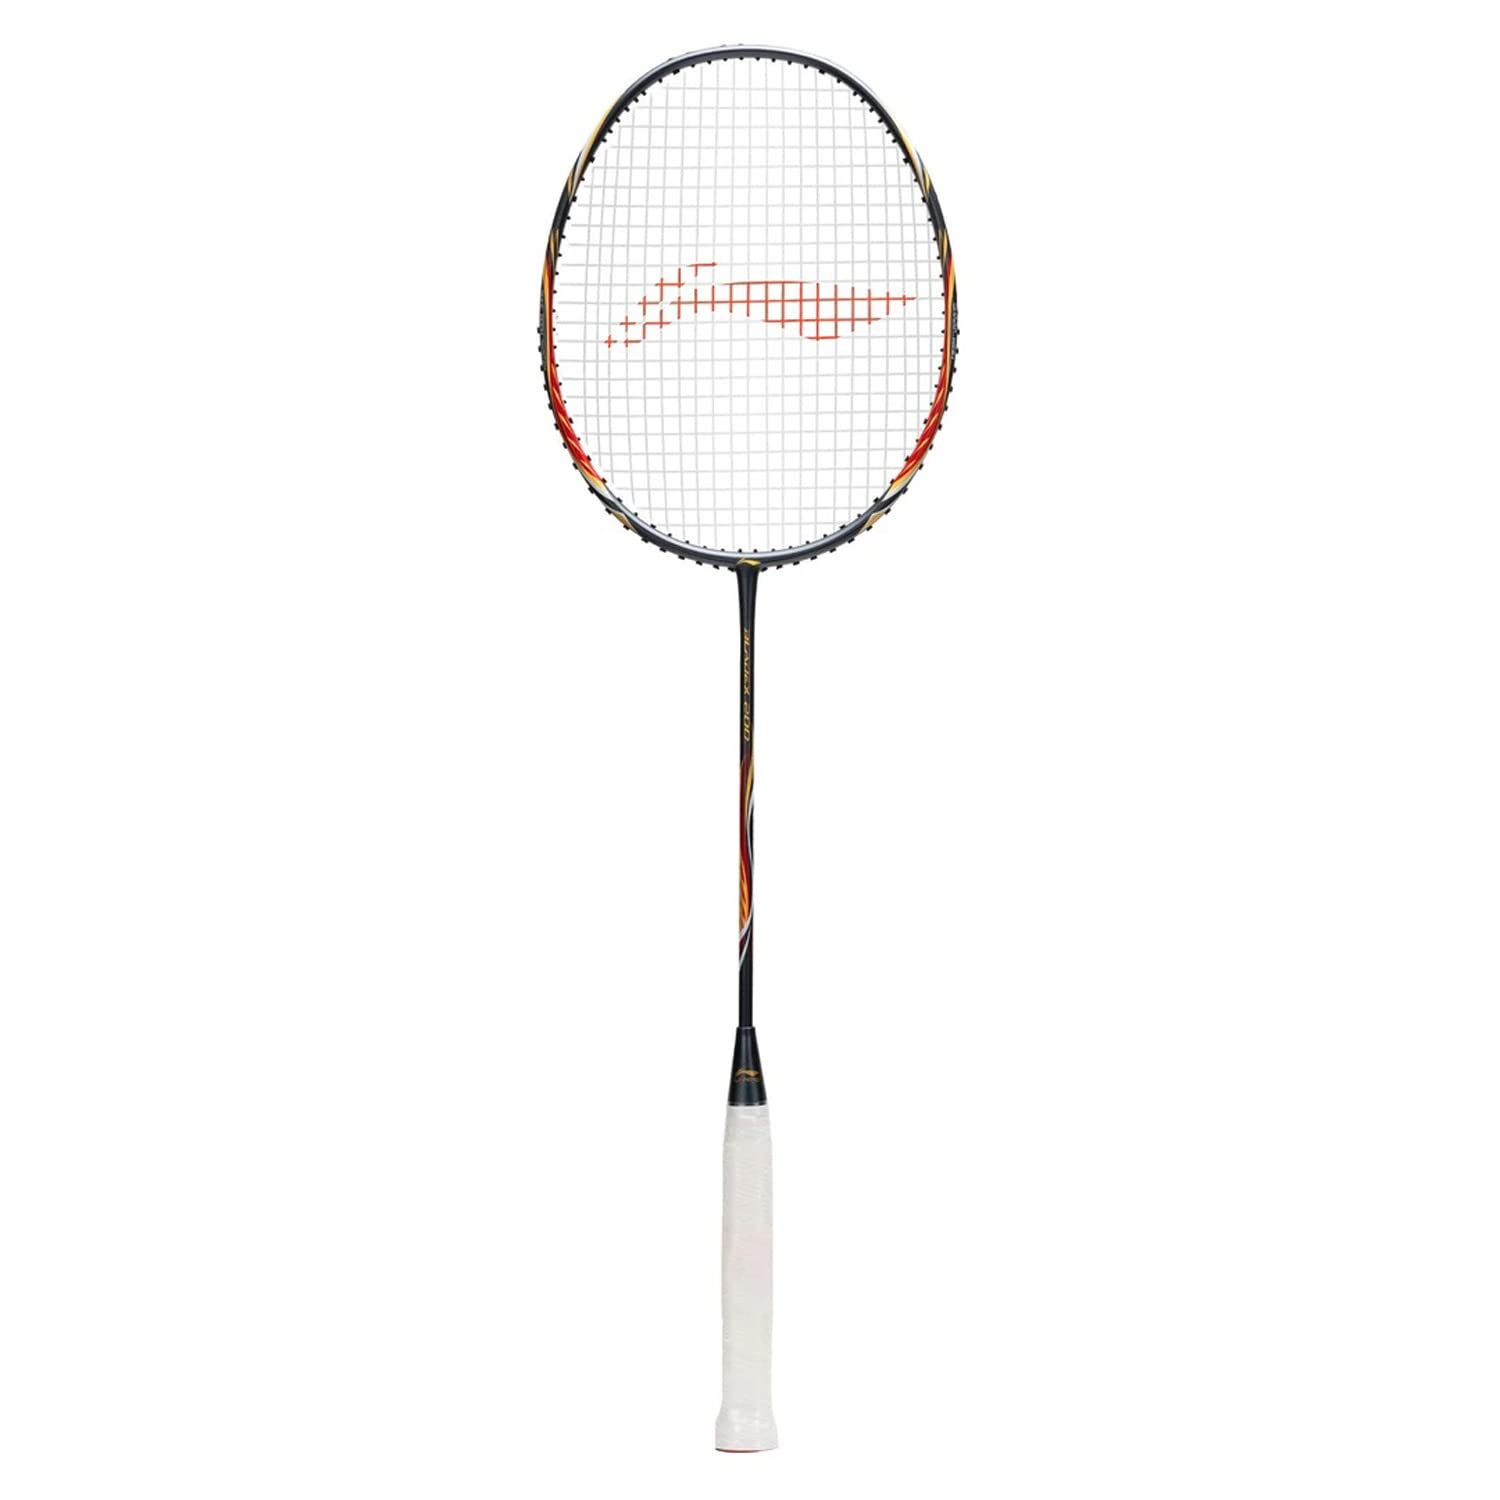 Li-Ning Bladex 200 R-Series Strung Badminton Racquet, Charcoal/Red (4U